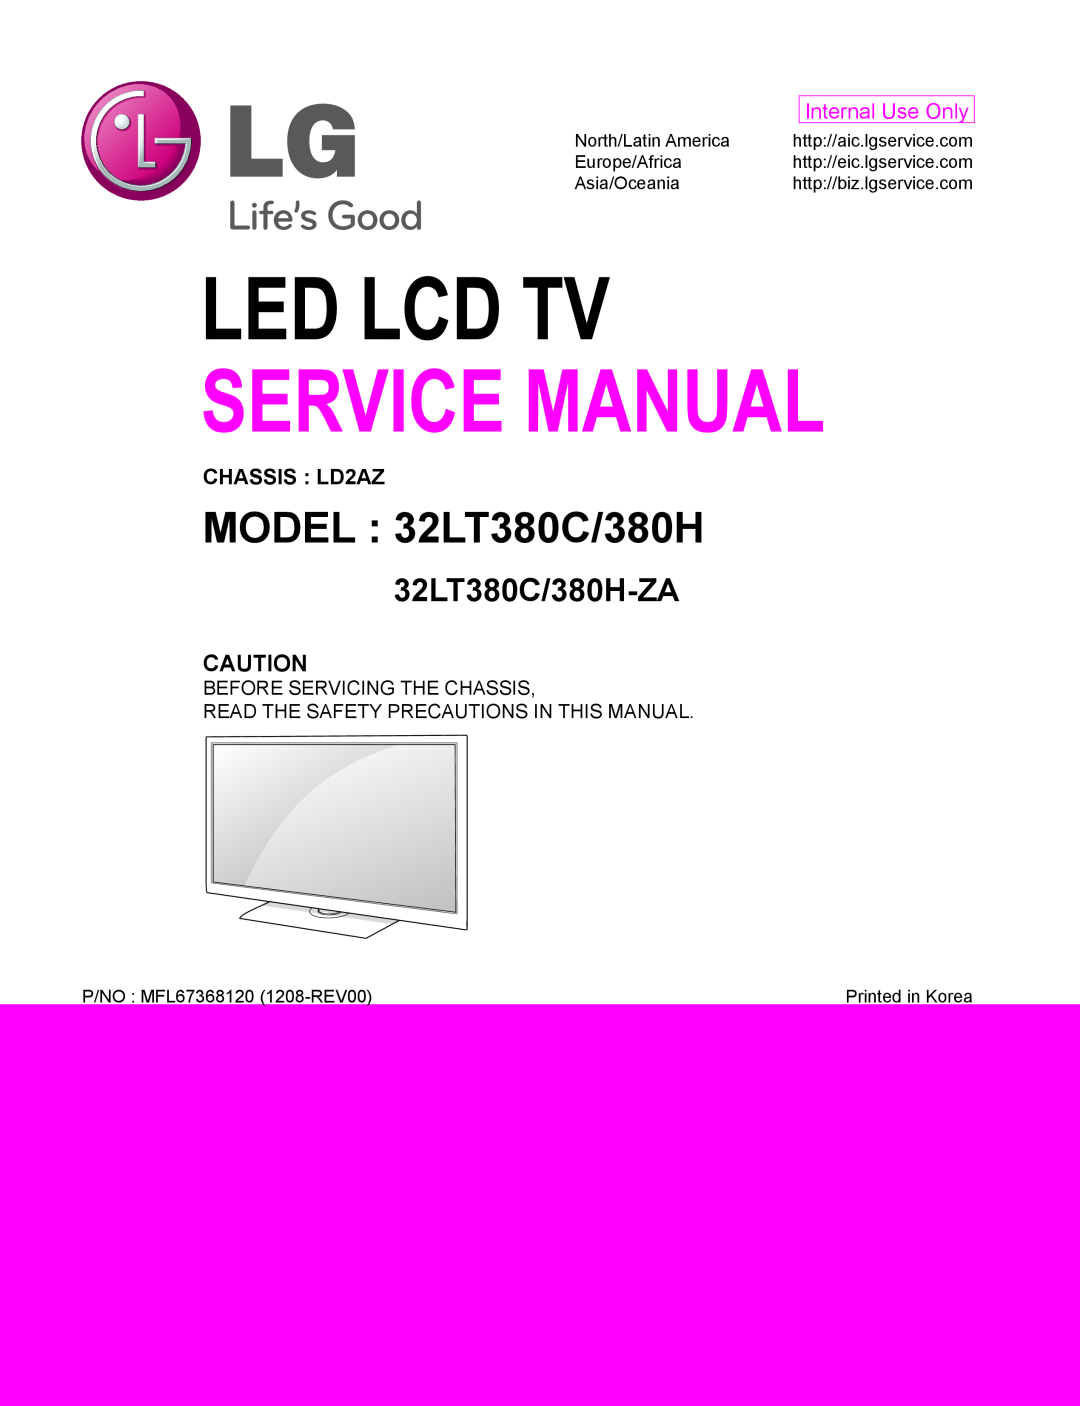 LG Electronics service manual MODEL 32LT380C/380H, 32LT380C/380H-ZA, CHASSIS LD2AZ, Before Servicing The Chassis 